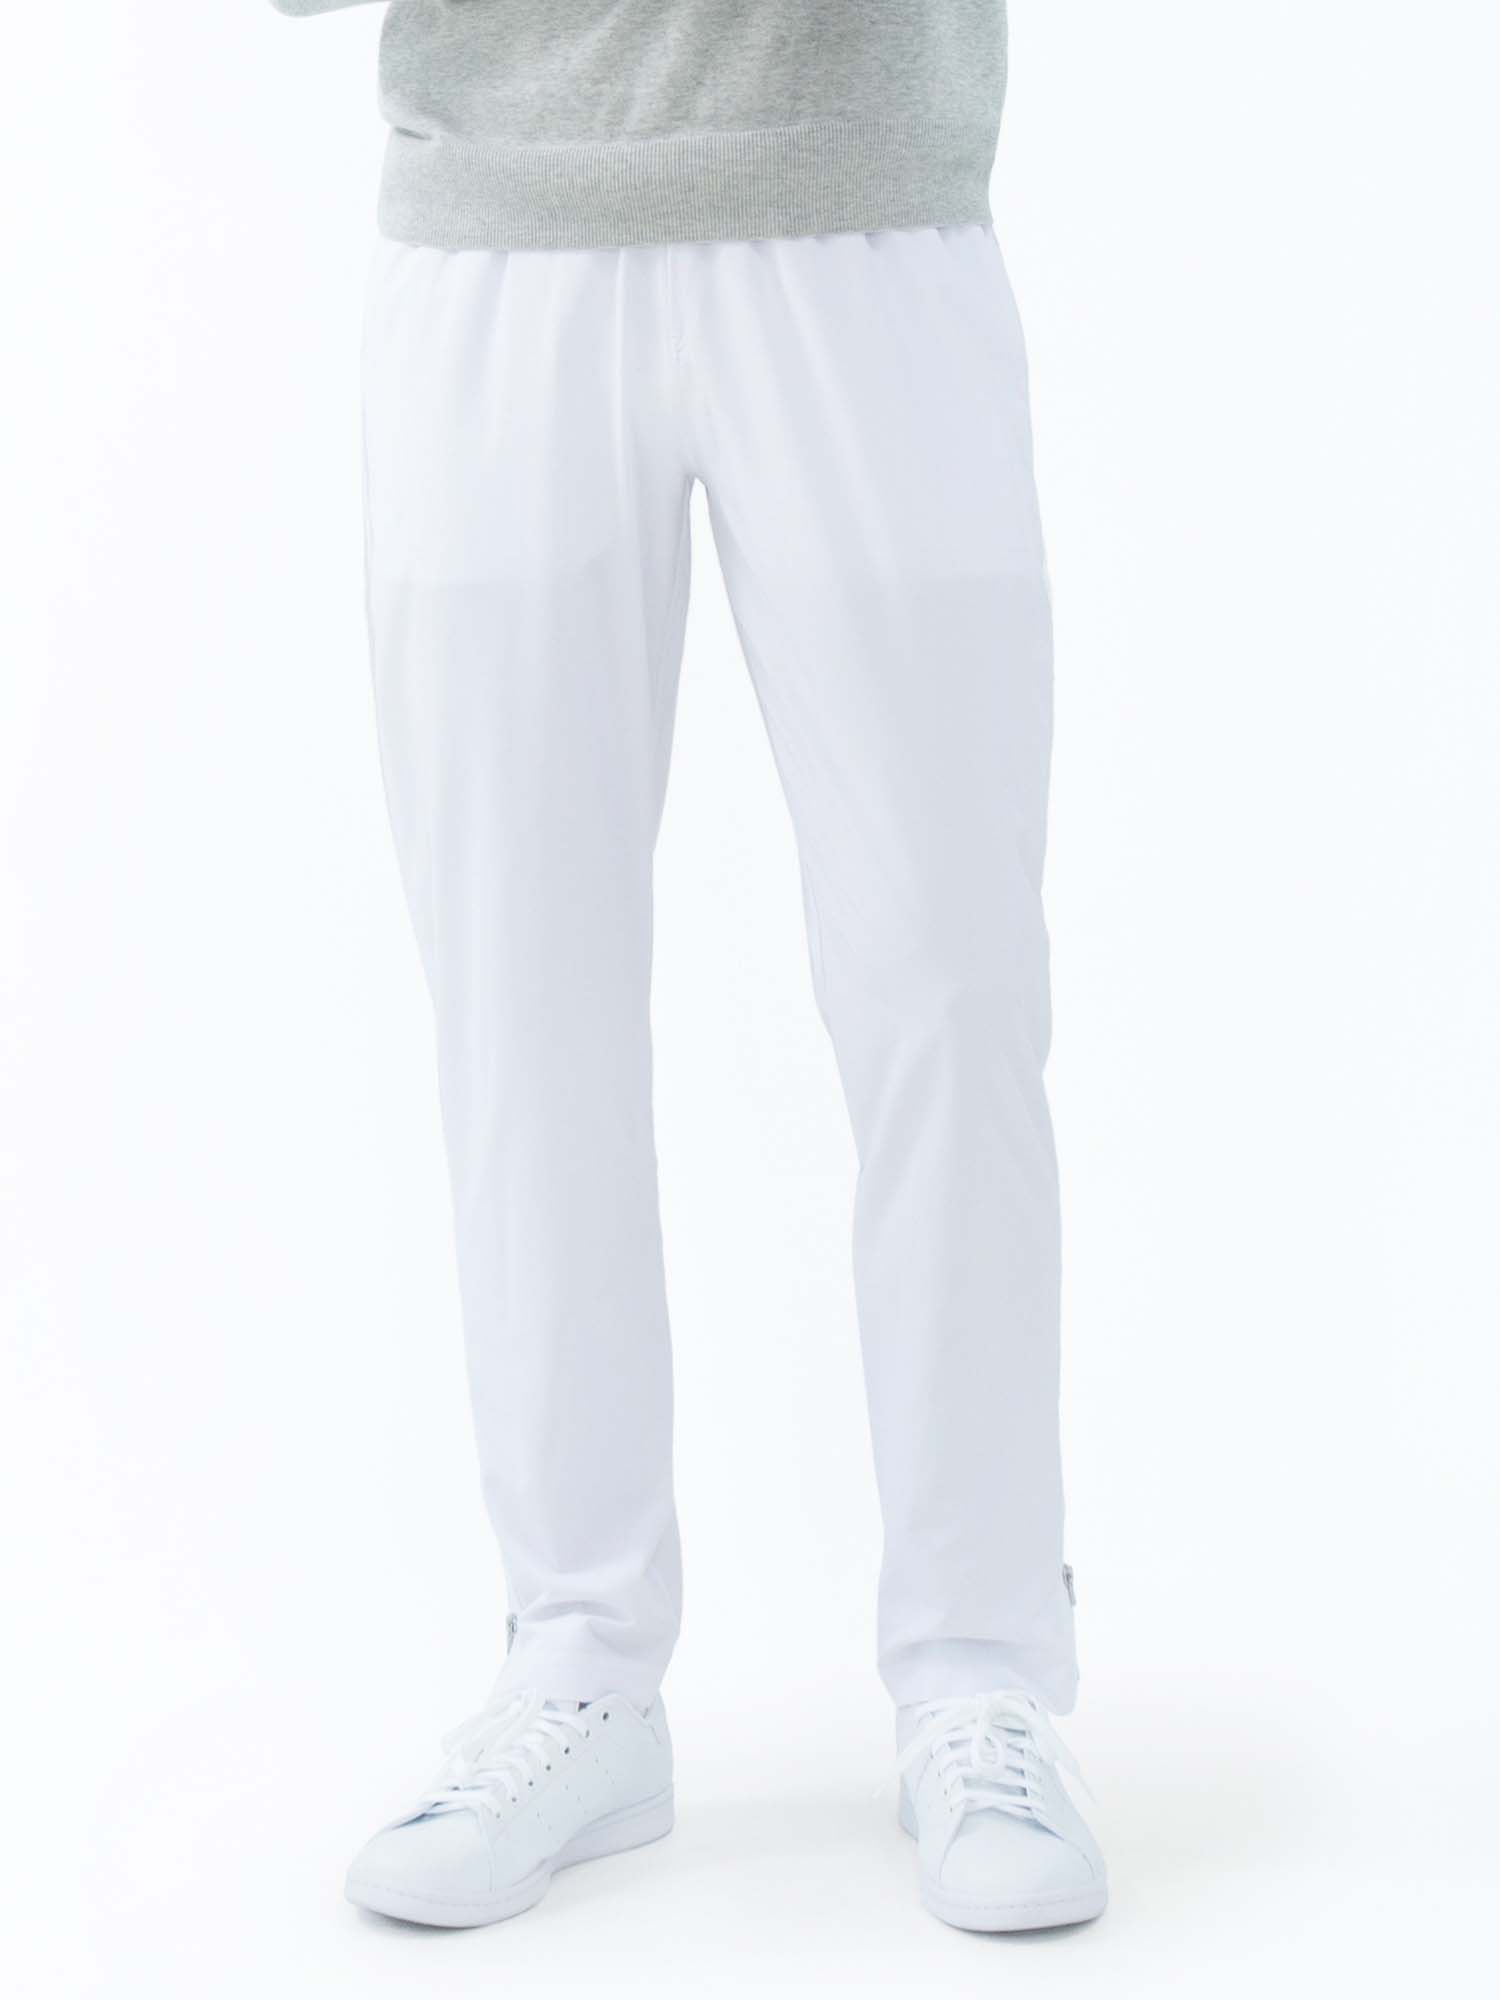 Classic Performance Men's Tennis Pant - White